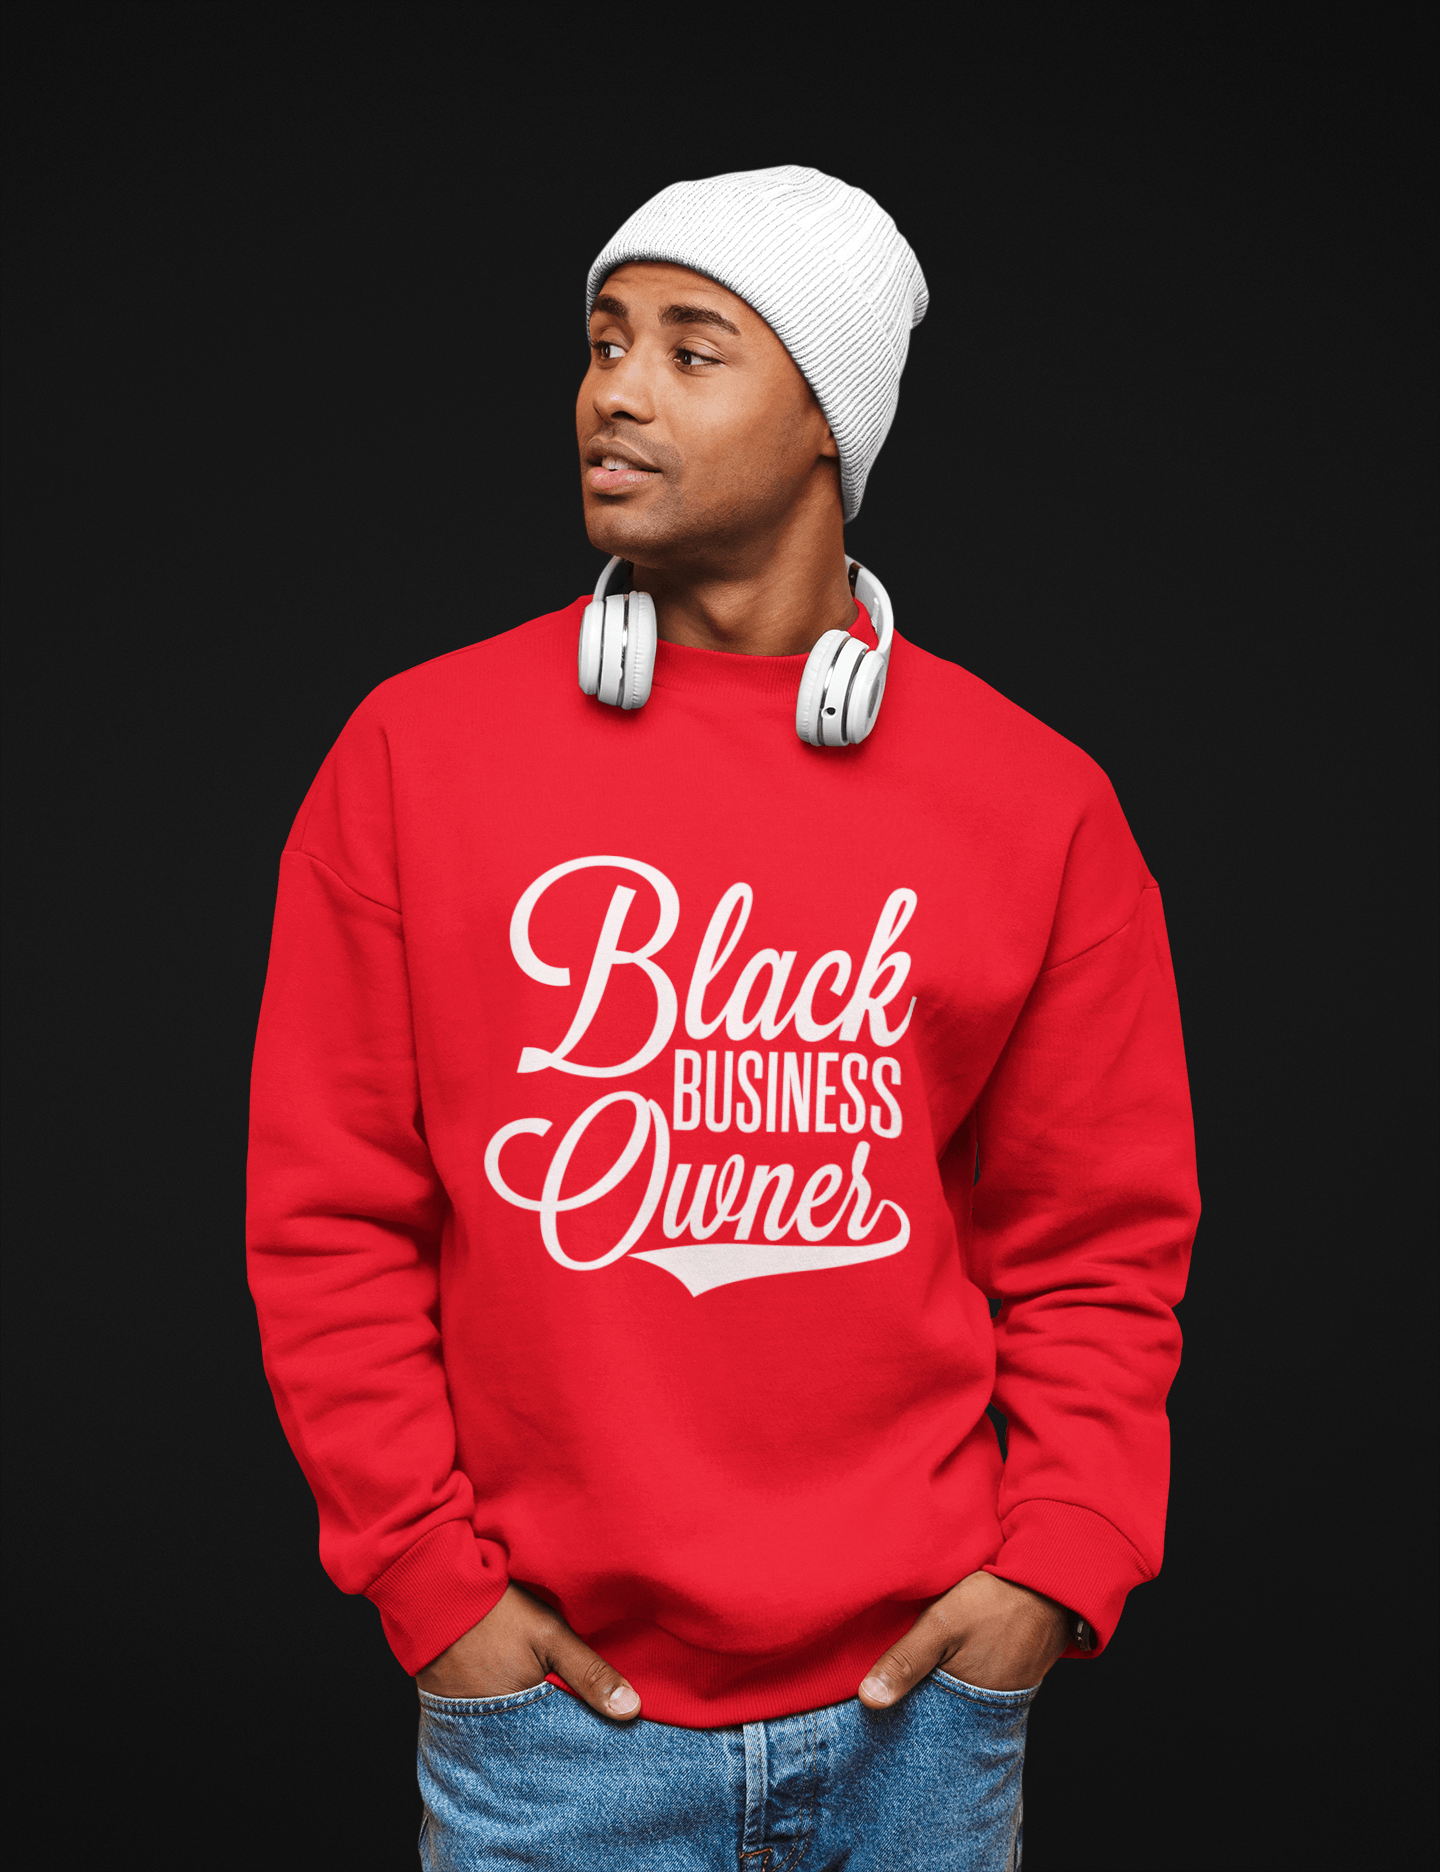 Black Business Owner (White) Unisex Sweatshirt - Chocolate Ancestor